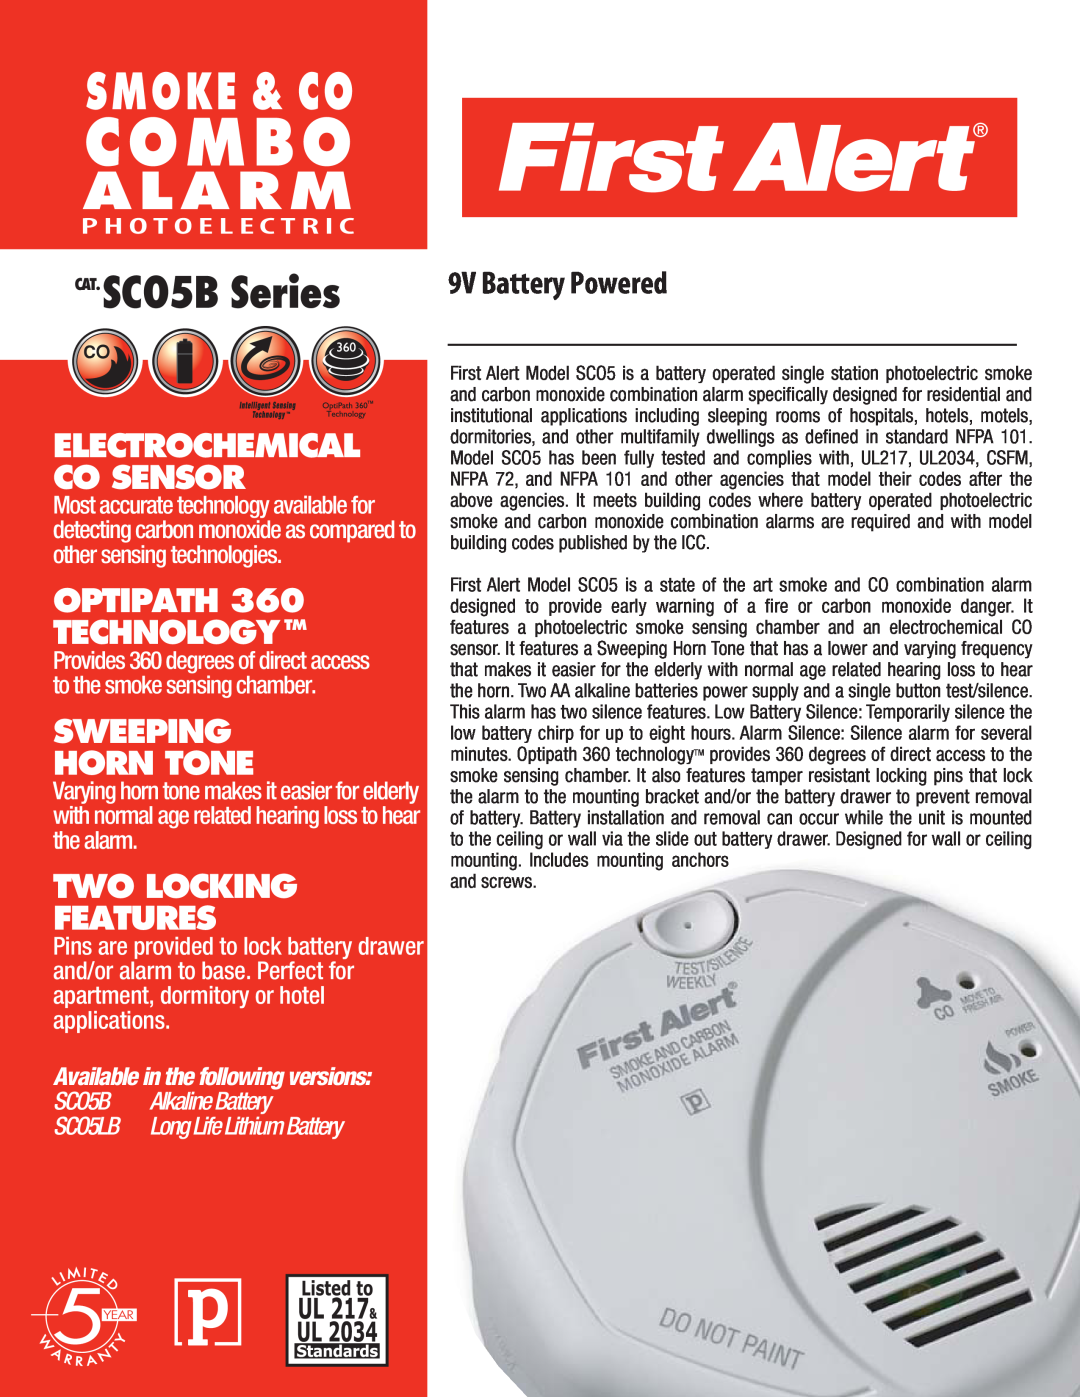 First Alert SC05B series manual Combo, Alarm, Smoke & Co, CAT. SCO5B Series, 9V Battery Powered, Optipath Technologytm 